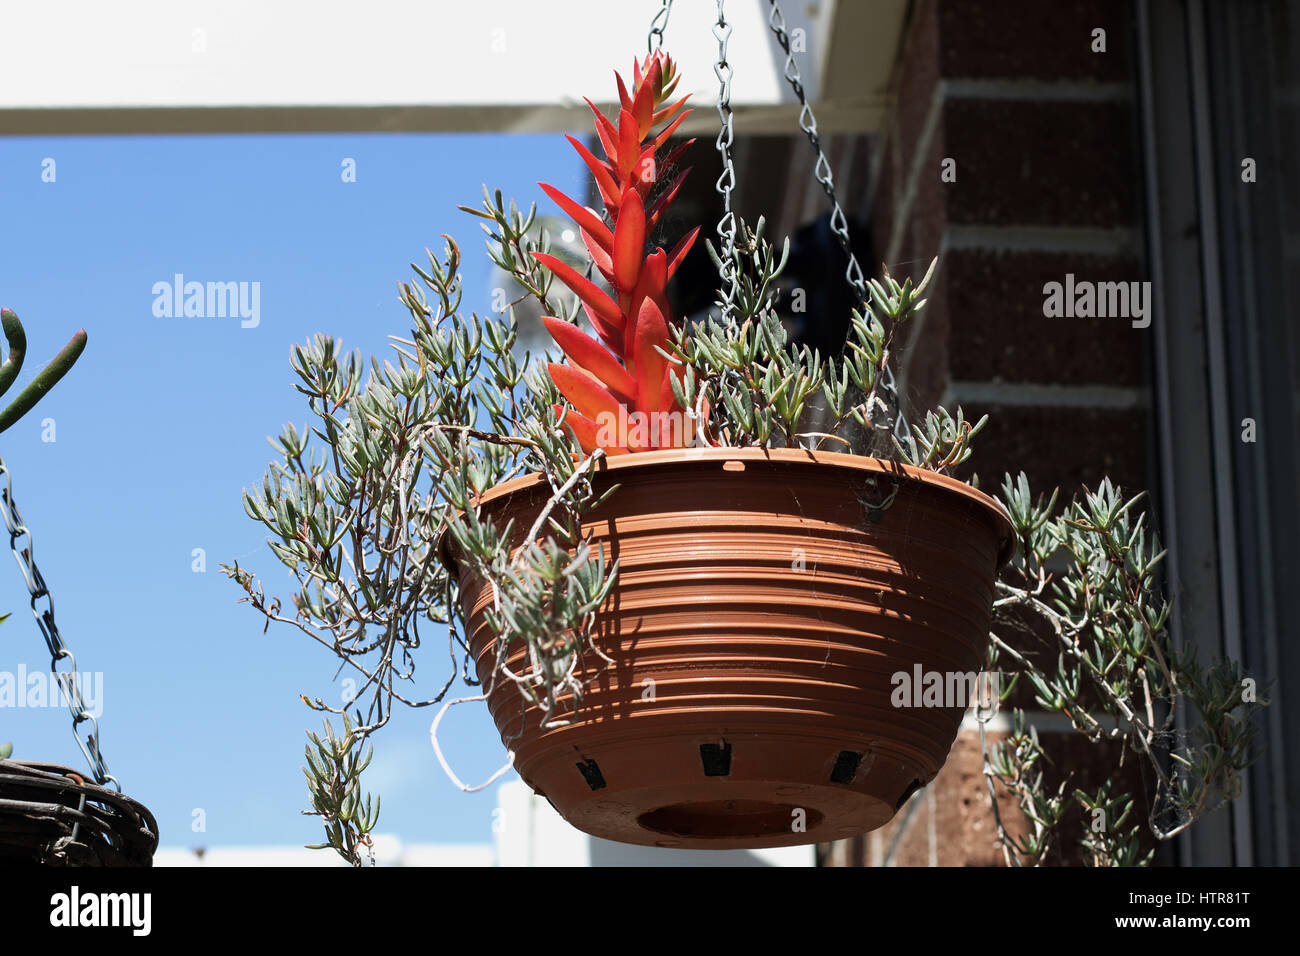 Growing Mesembryanthemum and Crassula Capitella Campfire Succulents in hanging pot Stock Photo